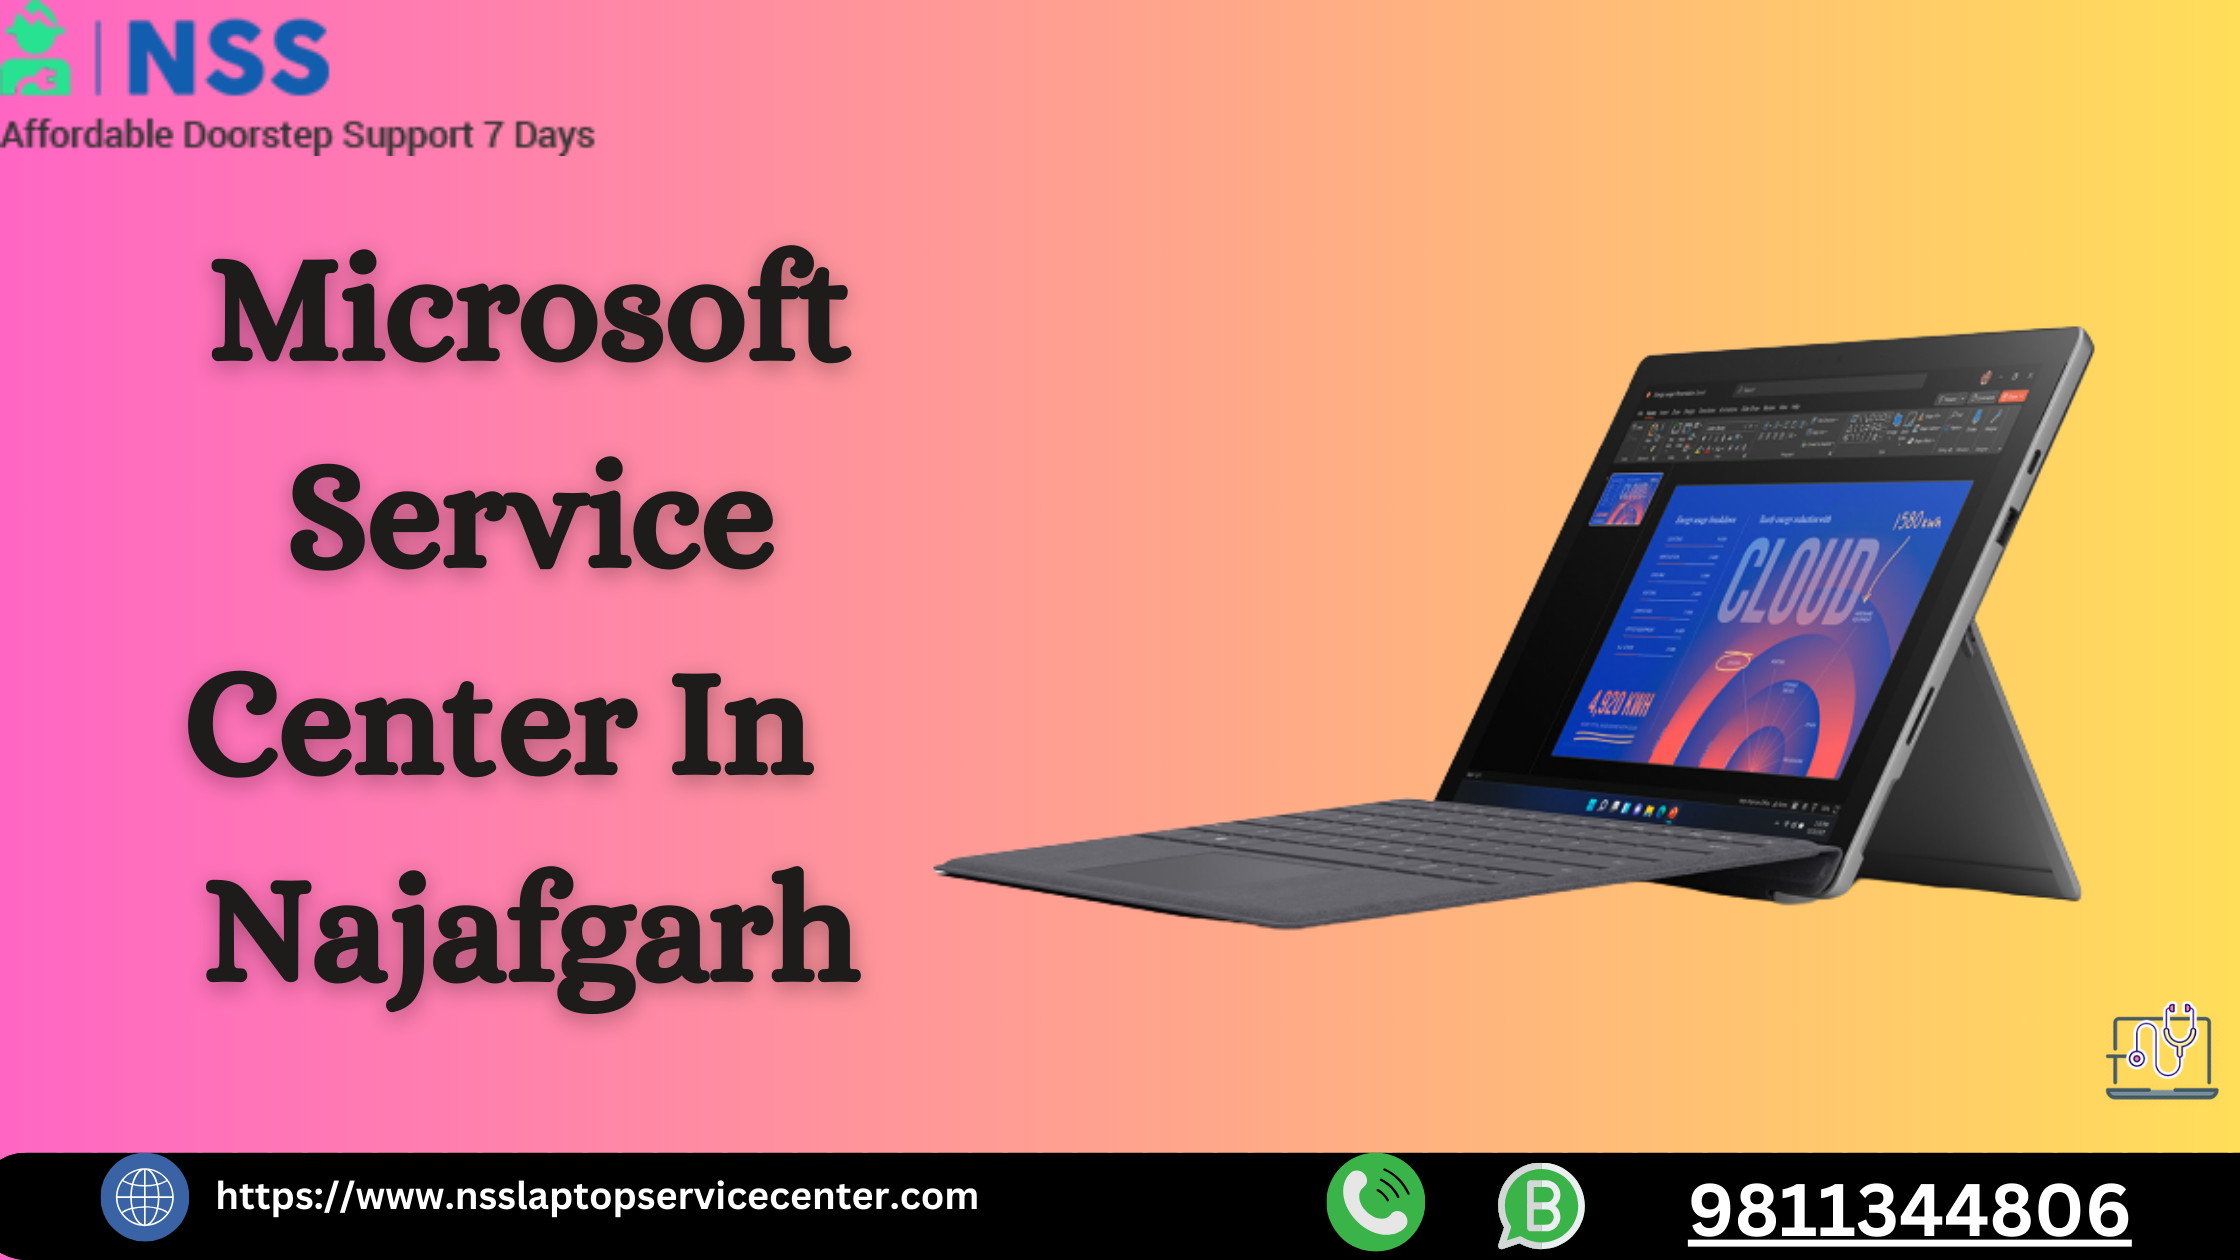 Microsoft Service Center in Najafgarh  Near Delhi